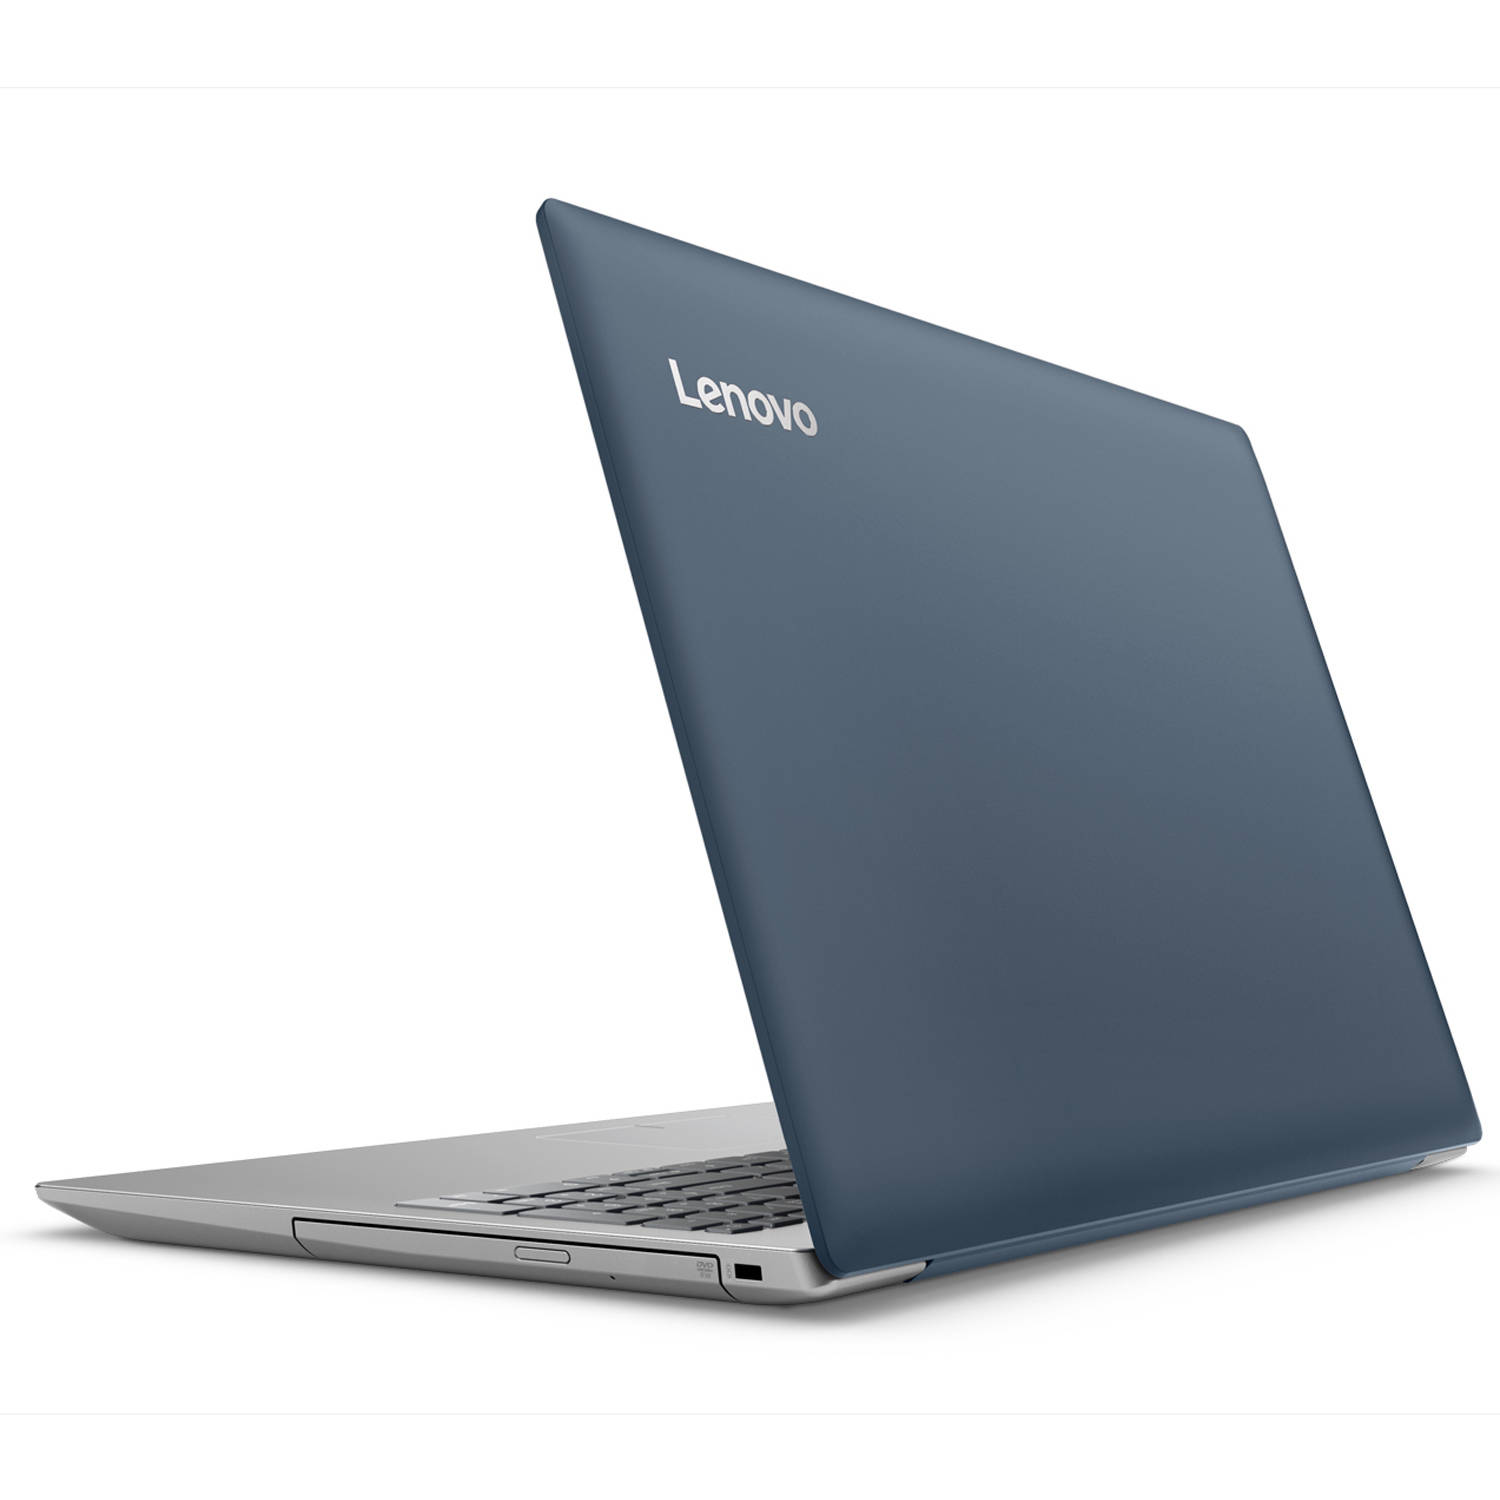 Lenovo ideapad 320 15.6" Laptop, Windows 10, AMD A9-9420 Dual-Core Processor, 4GB RAM, 1TB Hard Drive - Denim Blue - image 1 of 11